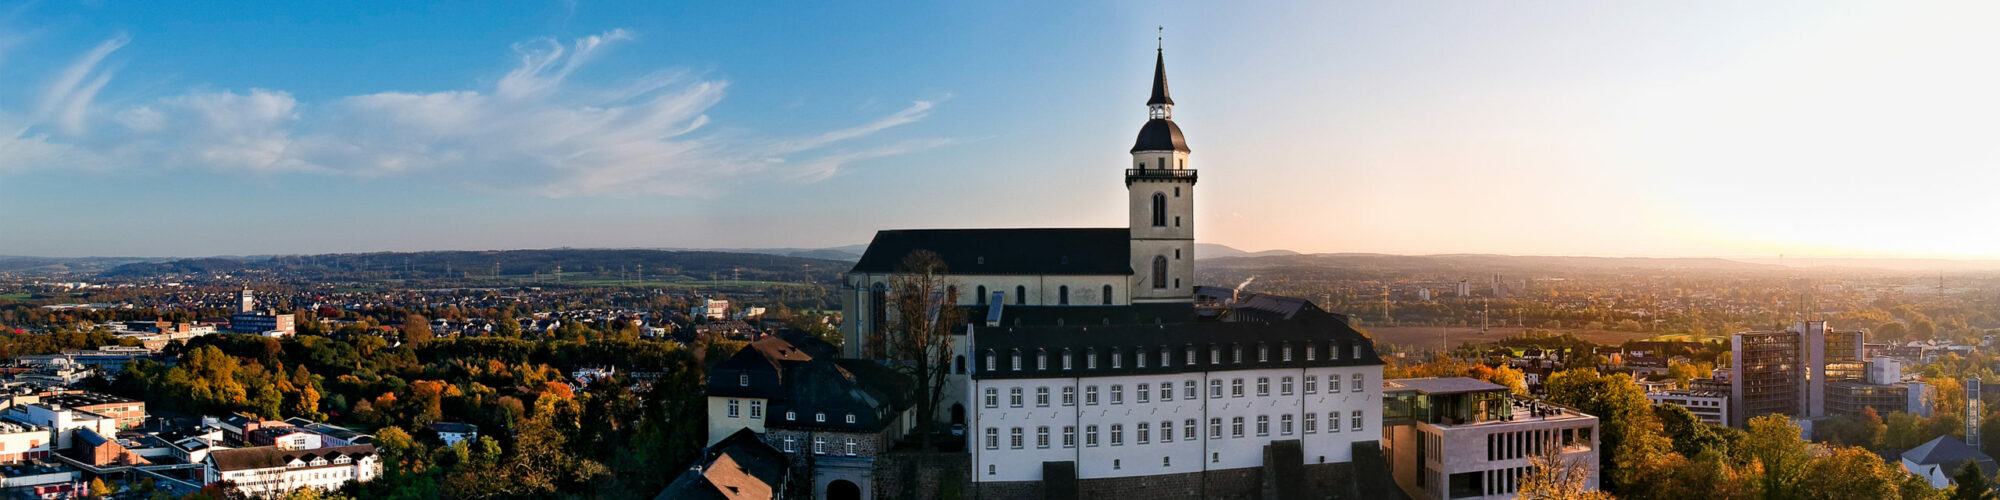 City view of Siegburg, branch valantic IBS & FSA Siegburgrio Schauster, district town of Siegburg)